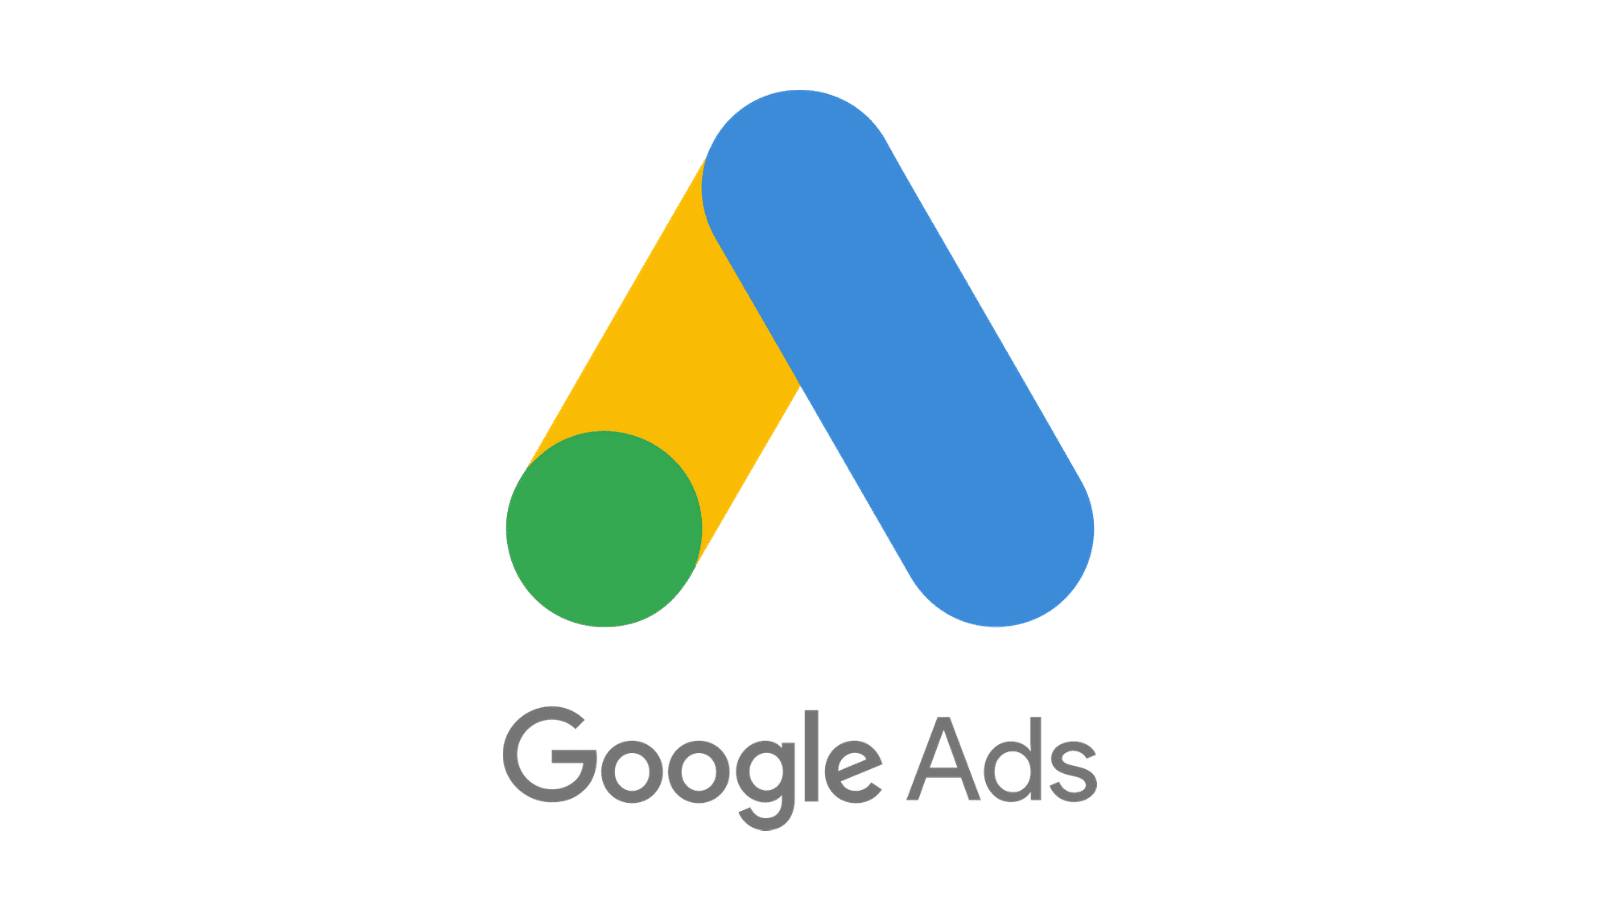 Image Specs for Google Ads | JumpFly Digital Marketing Blog